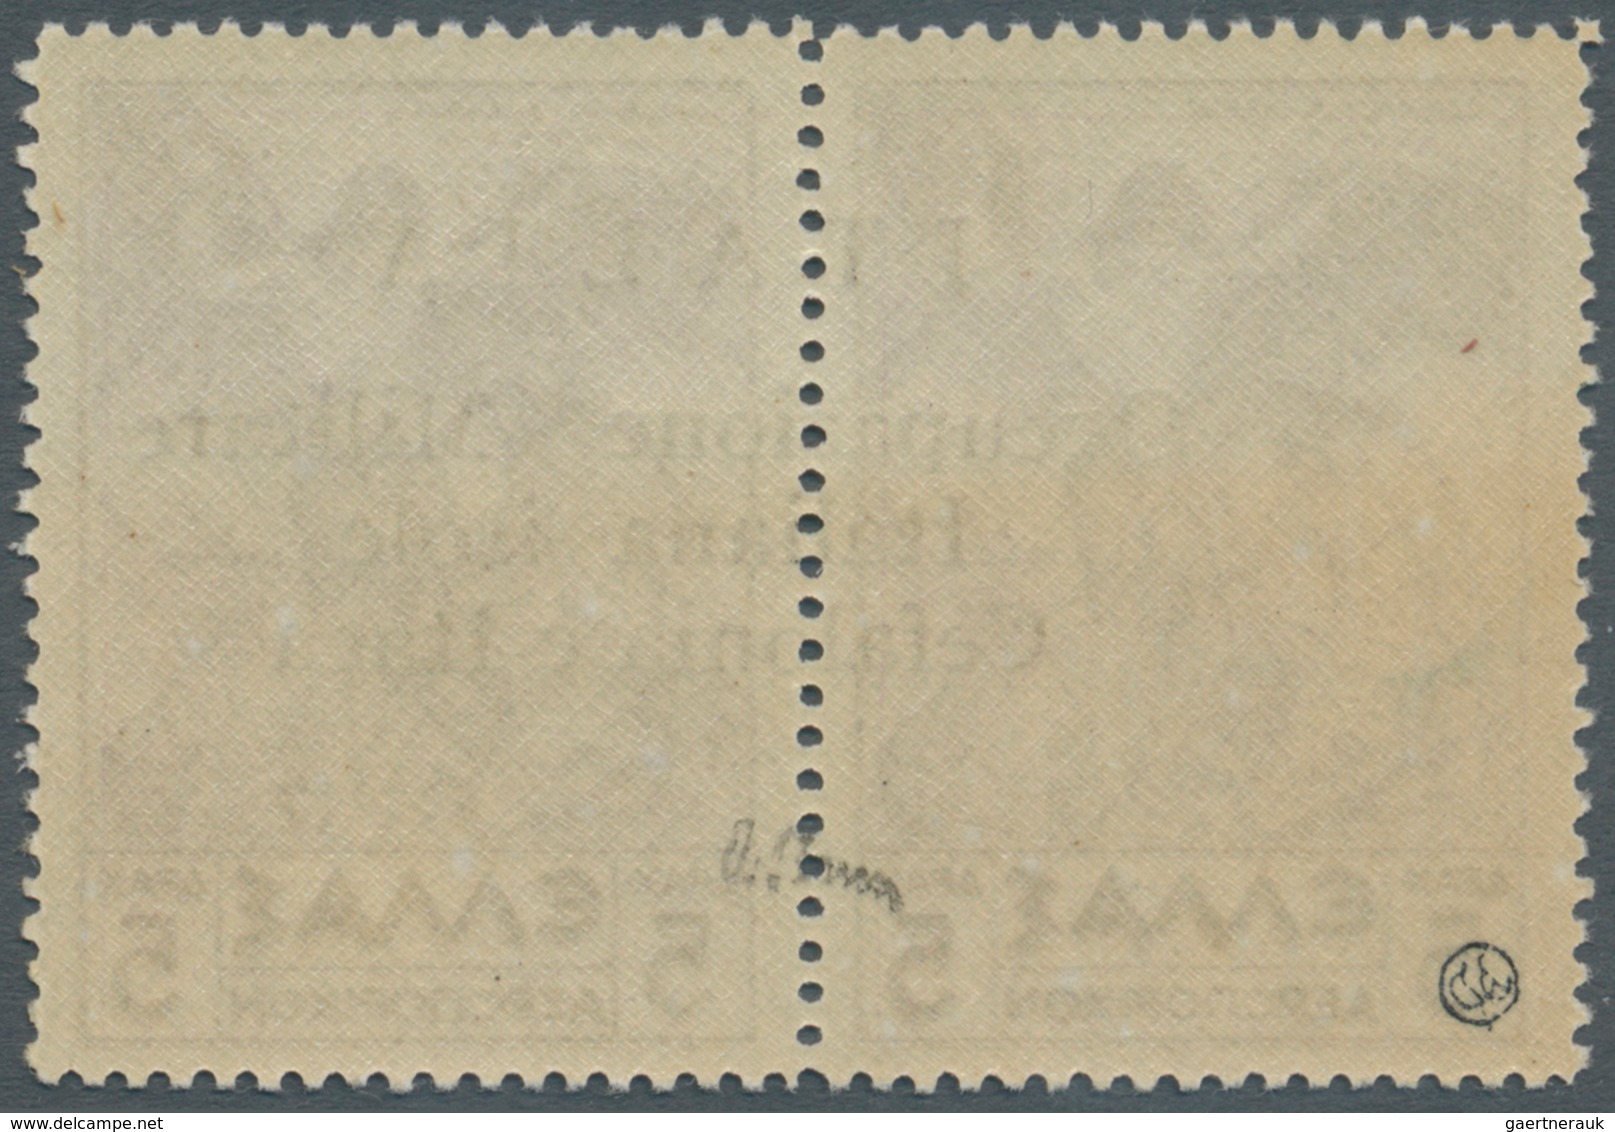 Ionische Inseln - Lokalausgaben: Kefalonia Und Ithaka: 1941, Argostoli Issue, Airmail Stamp 5dr. Vio - Iles Ioniques